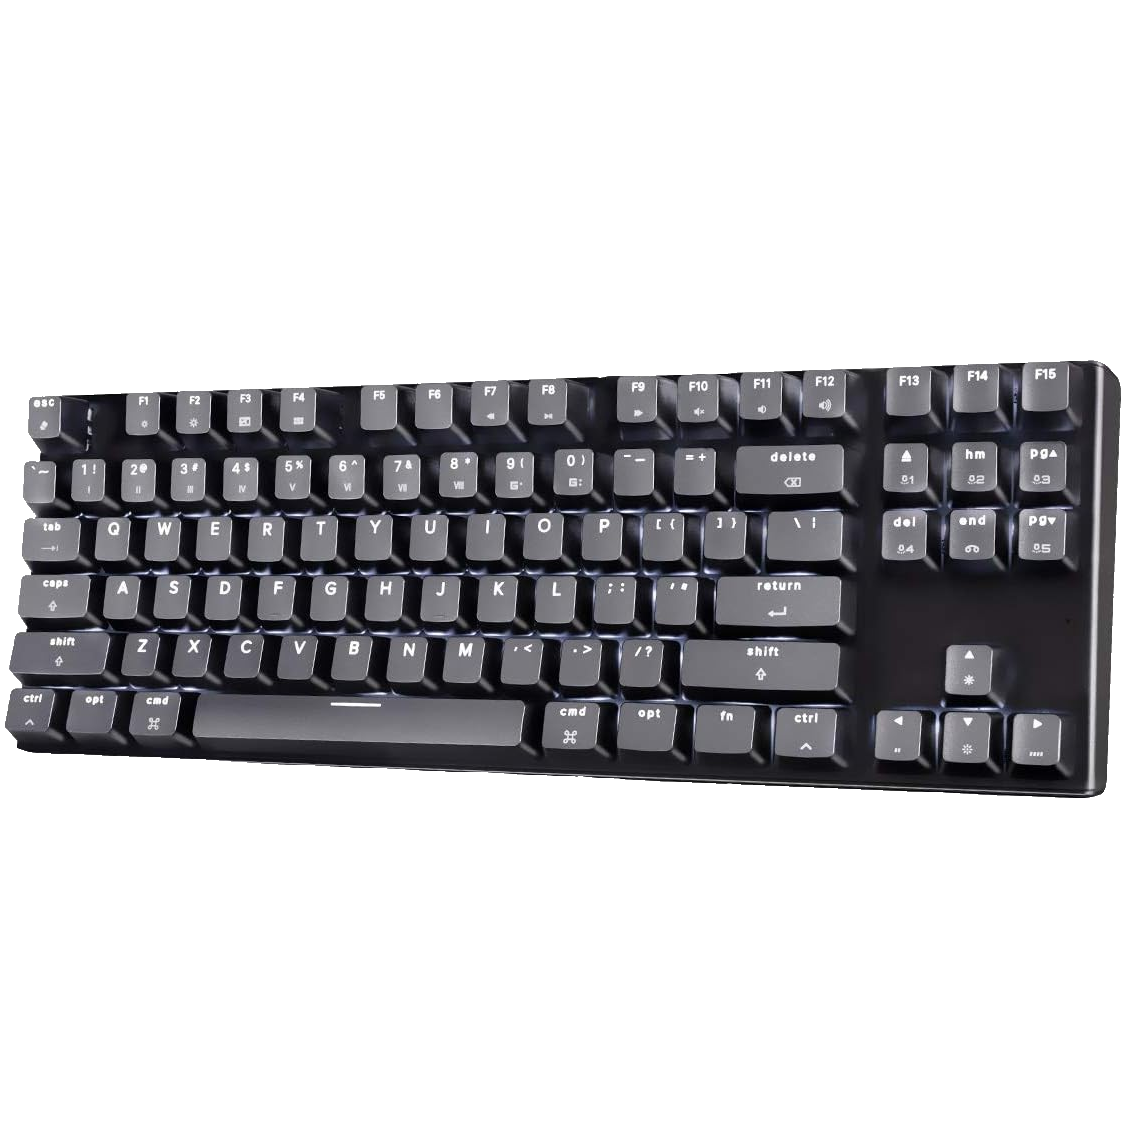 VELOCIFIRE M87 mechanical keyboard with mac keys